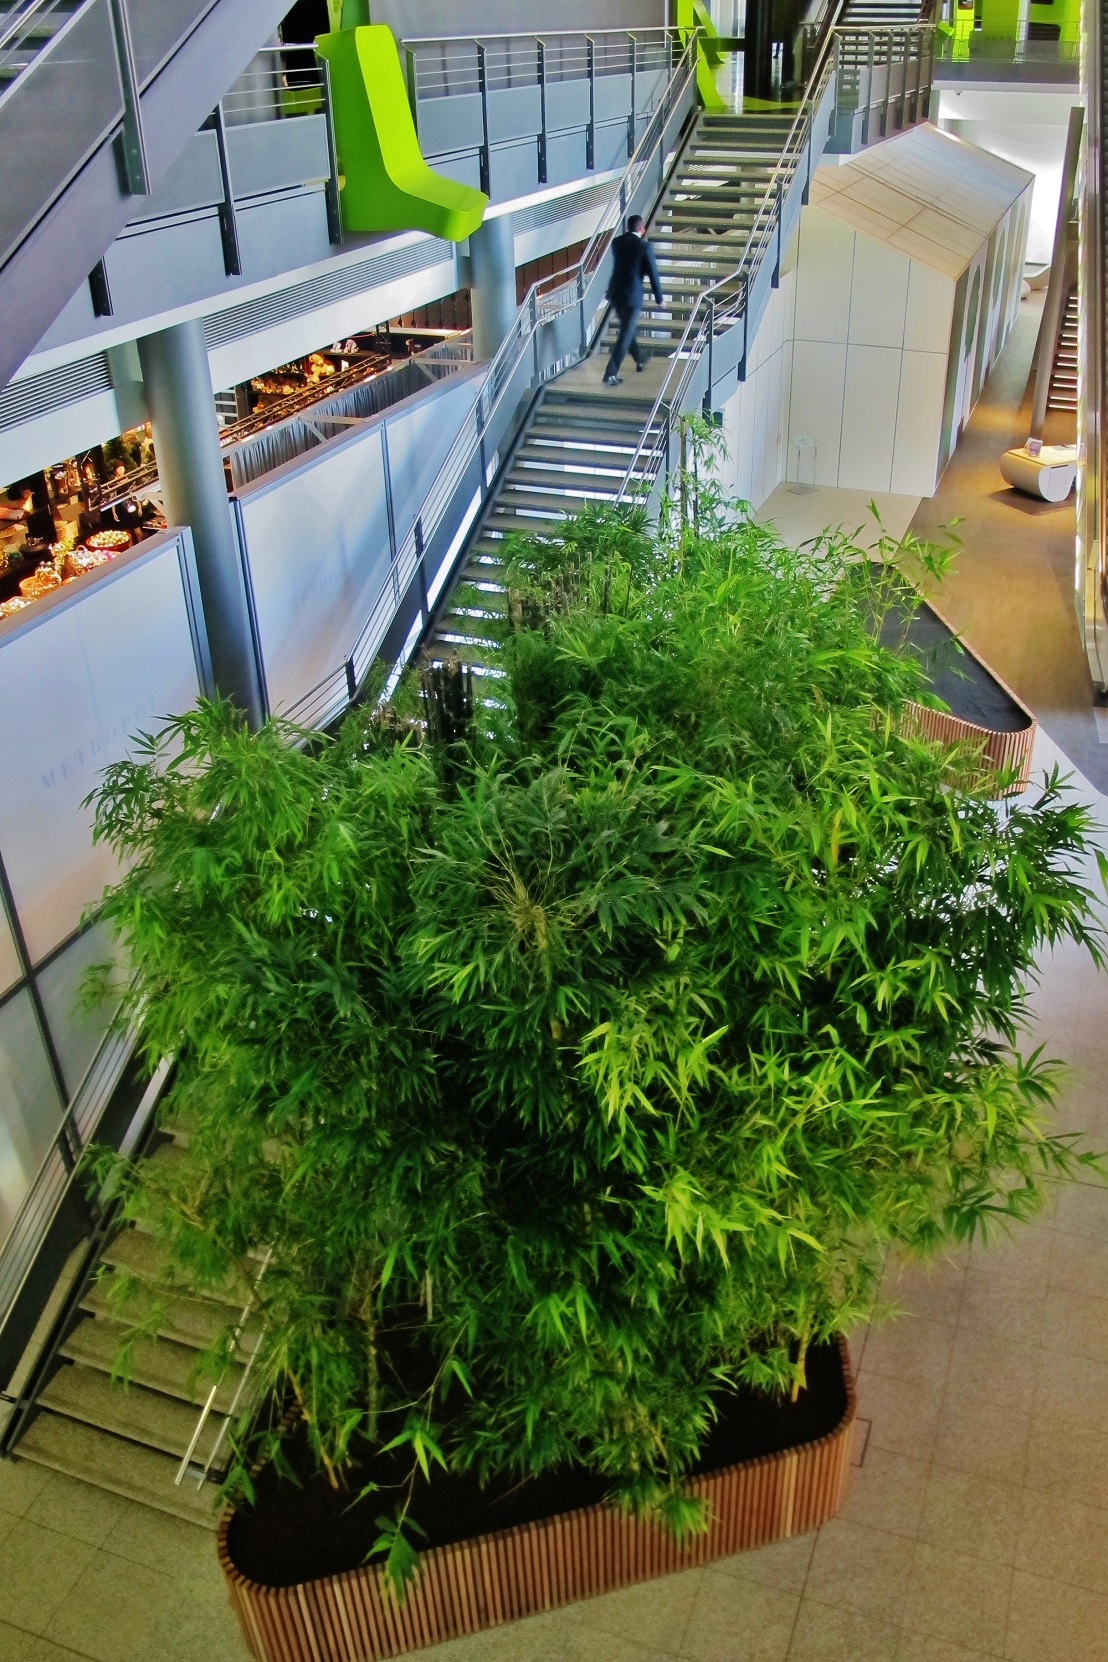 Big tropical tree interior lobby and stairway - Norway, Finland, Sweden, Denmark - Europe buy online